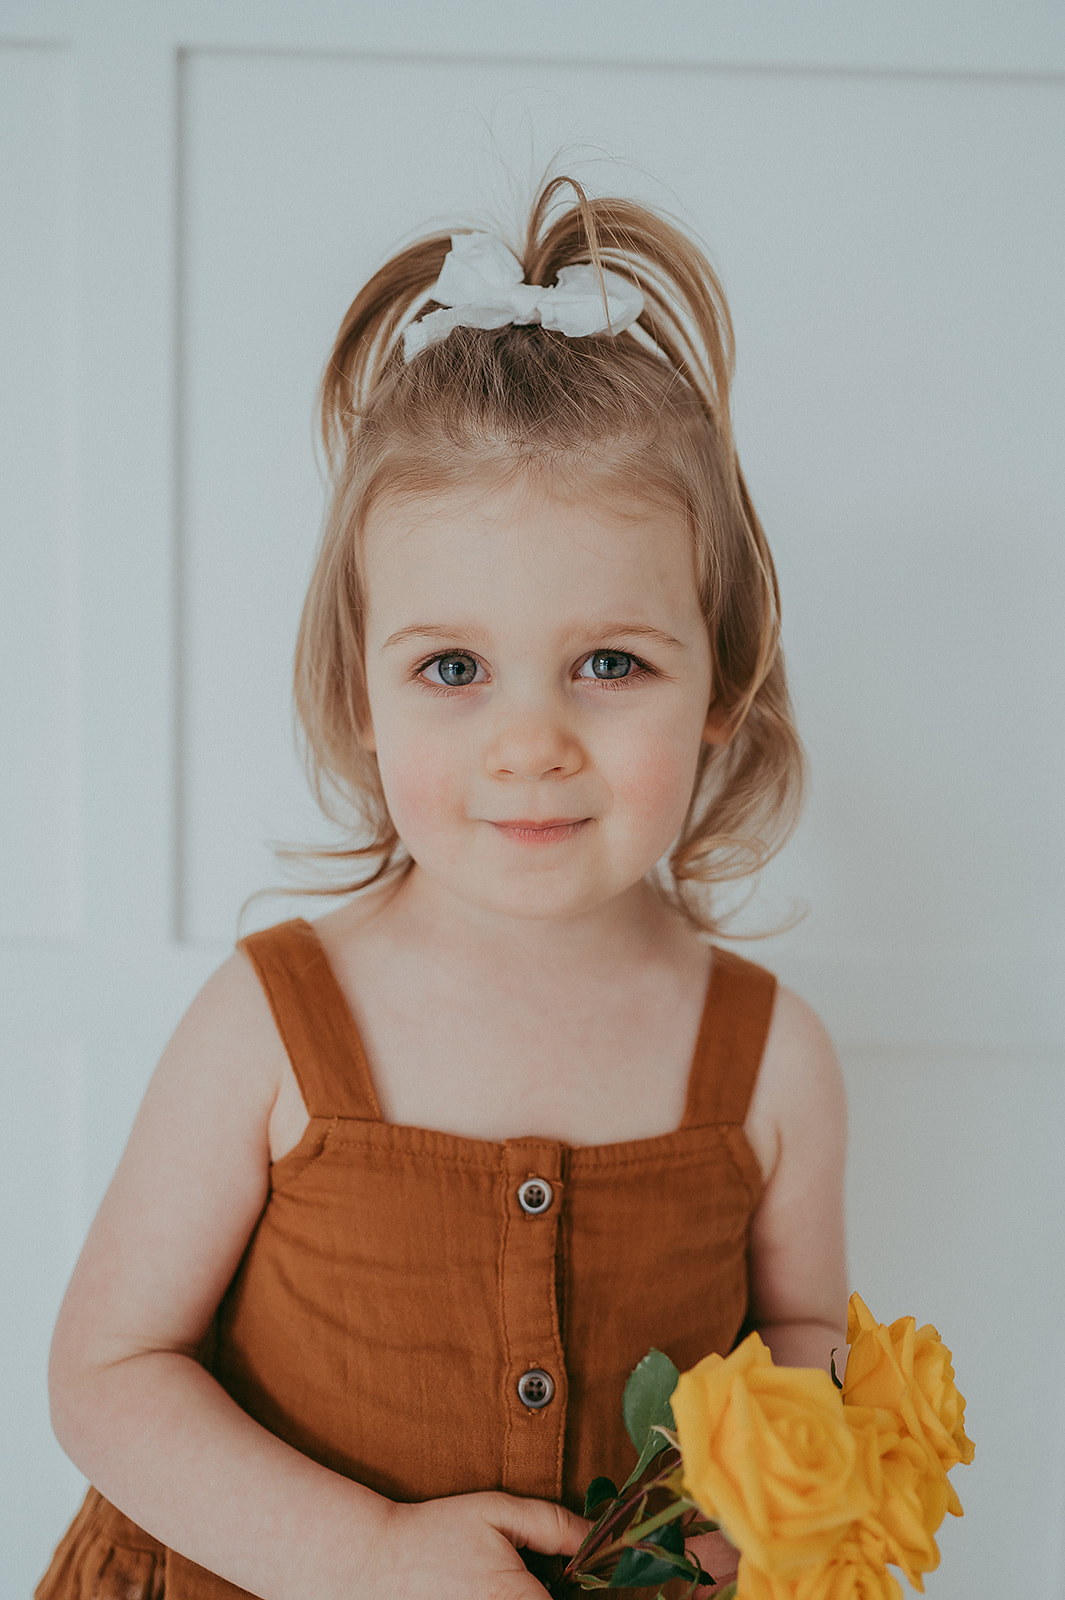 Little girl holding a flower in studio photo session